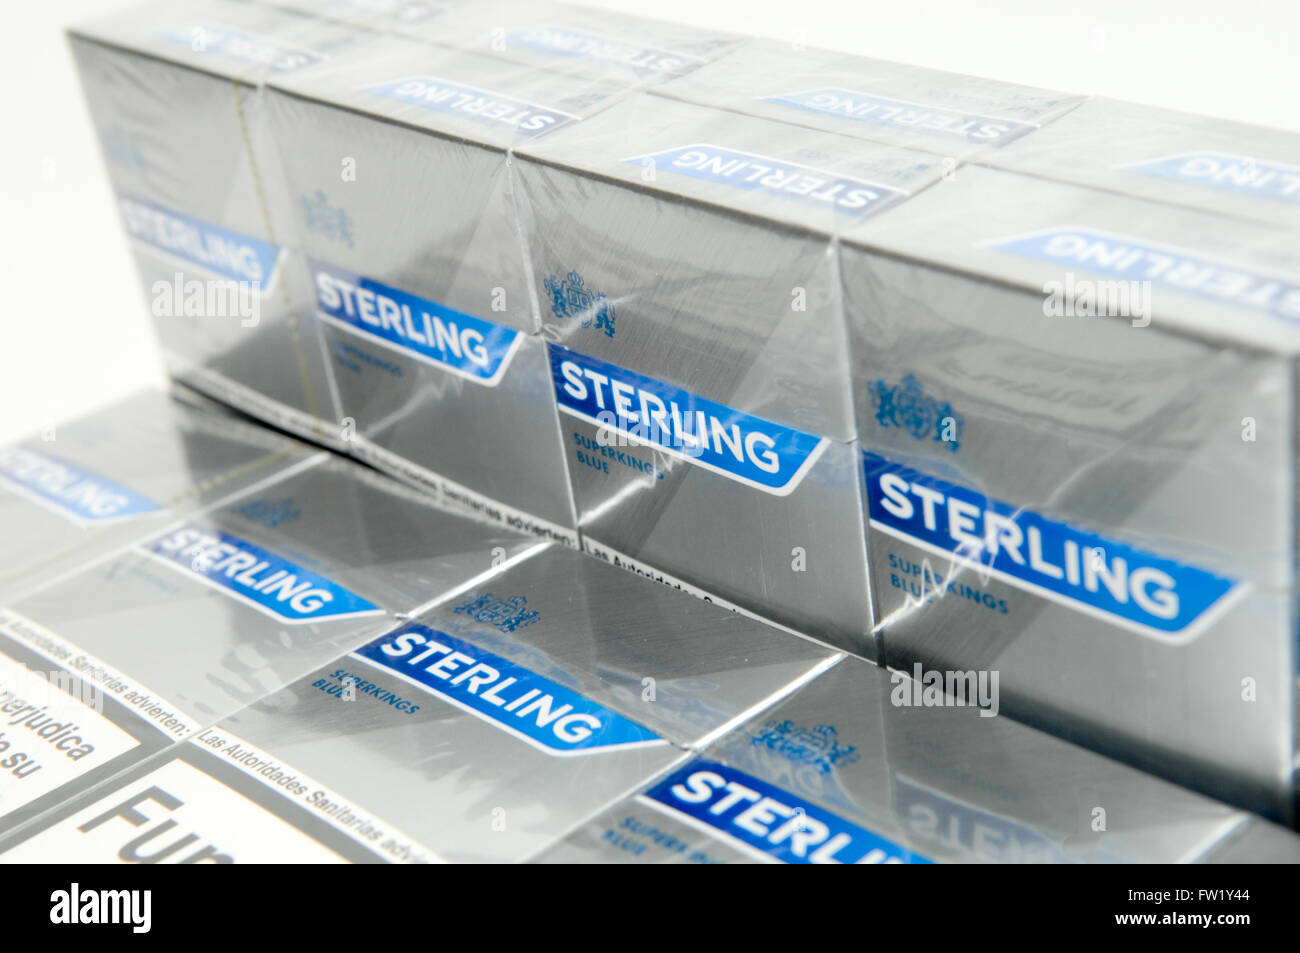 Stirling sigarette in vendita in una tabaccheria Foto stock - Alamy